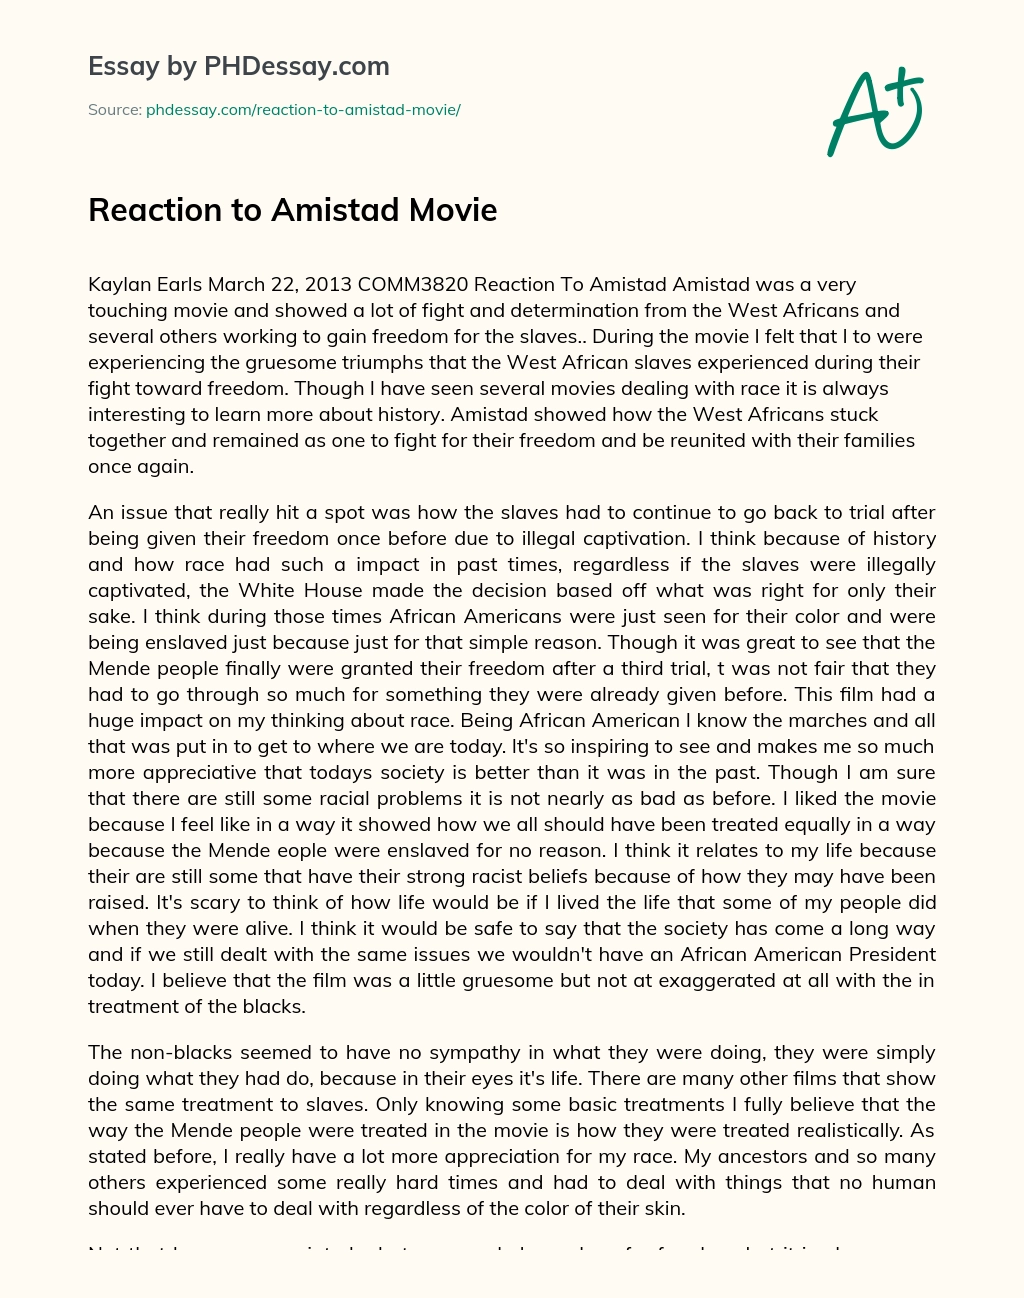 Reaction to Amistad Movie essay